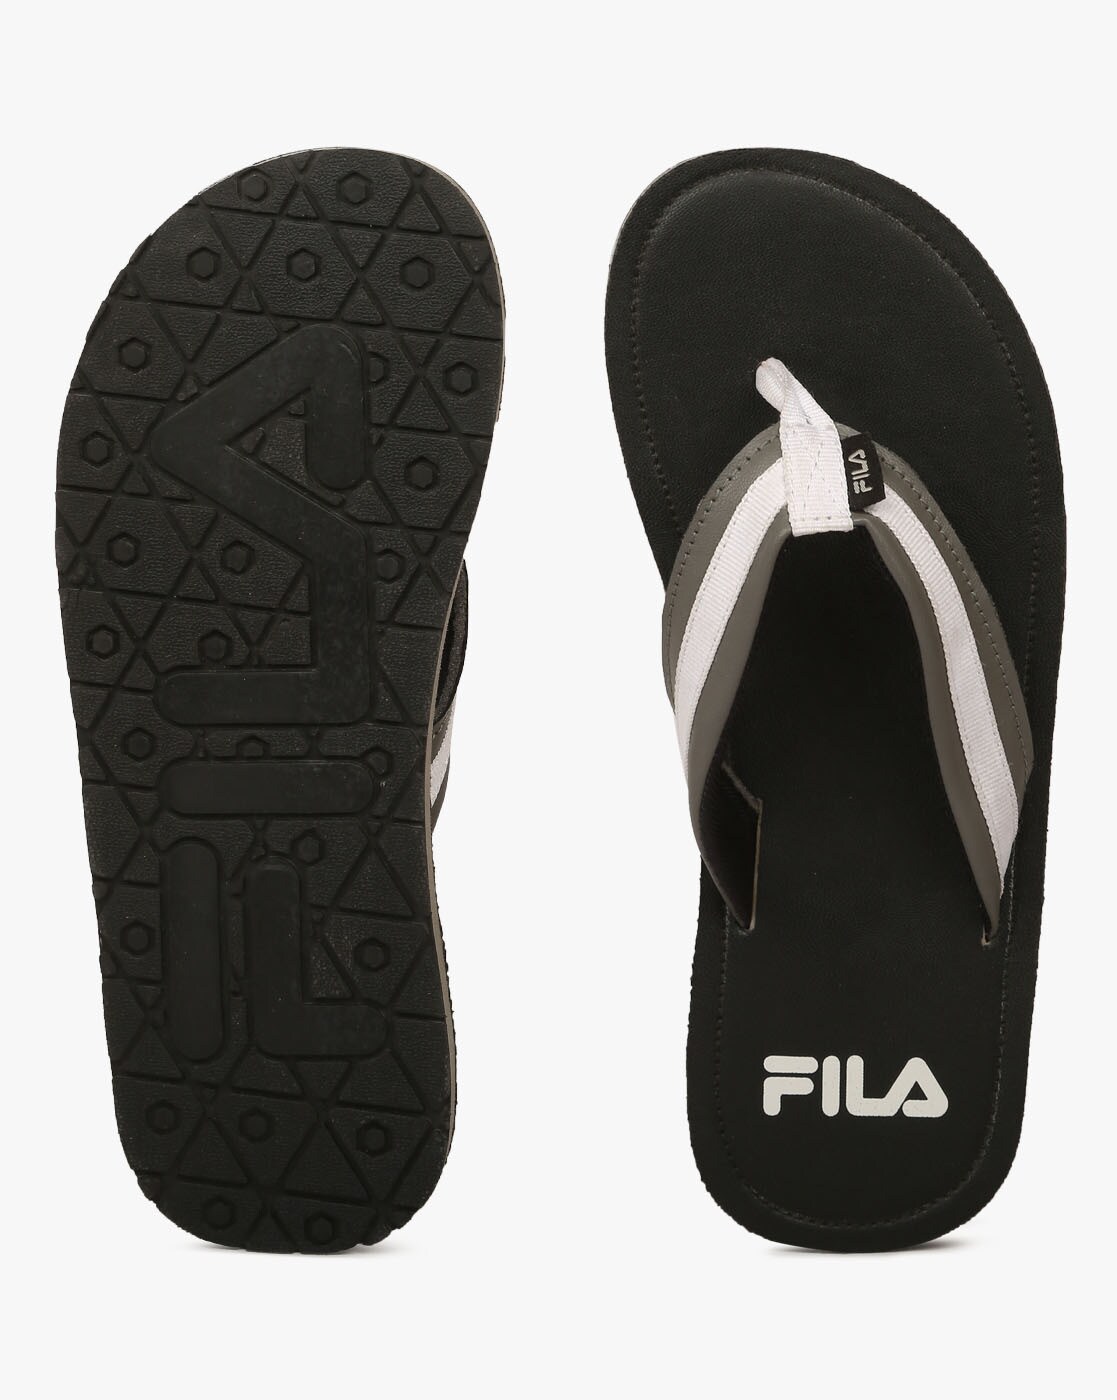 fila thong flip flops